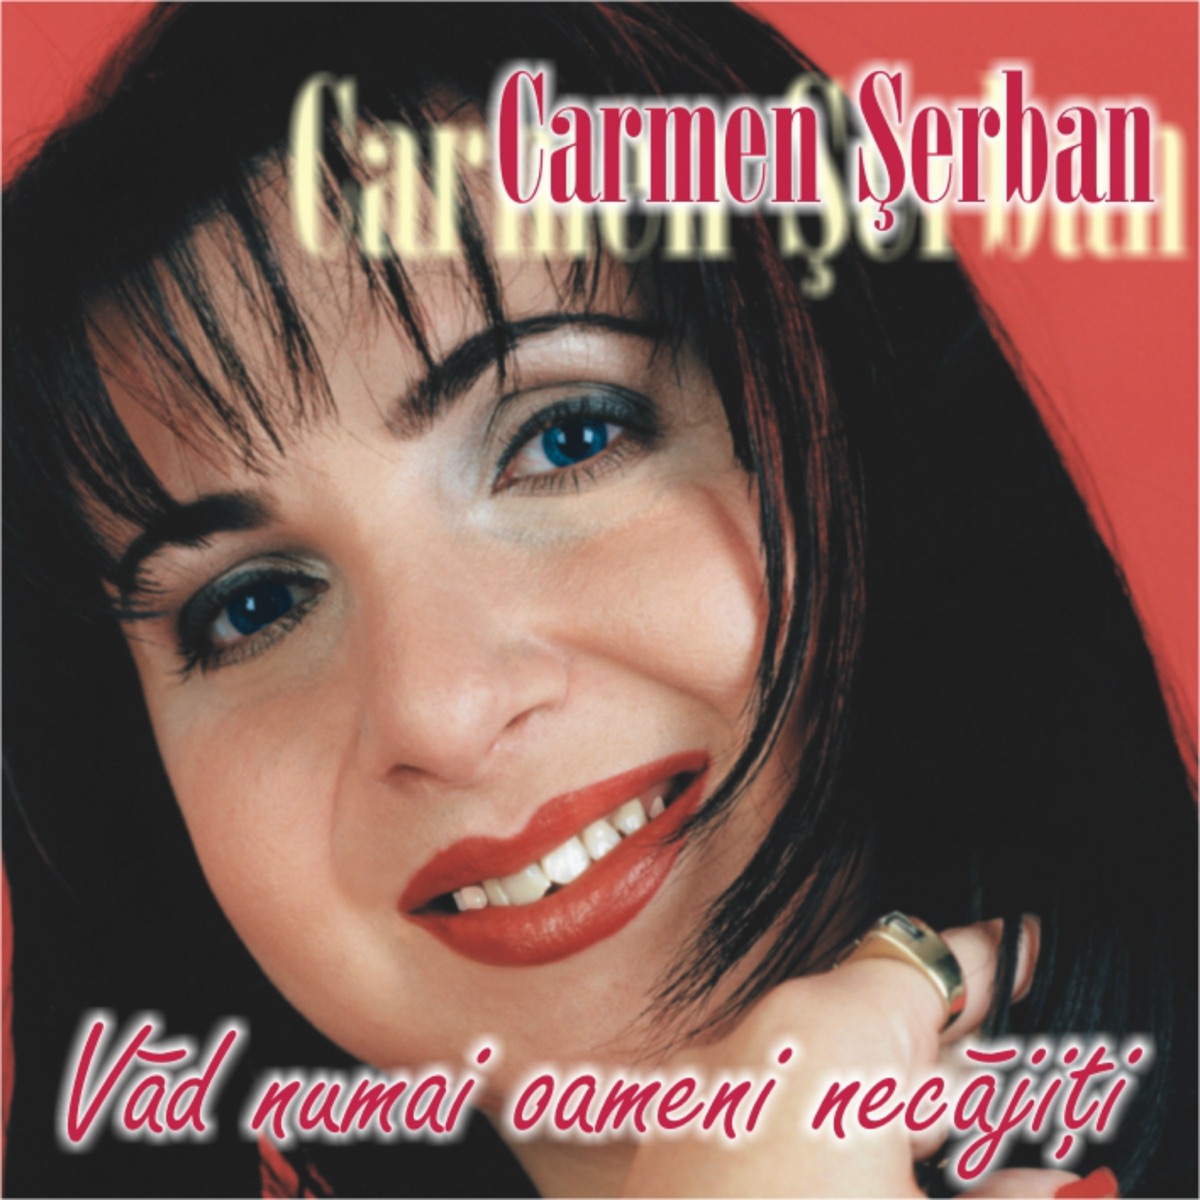 Atitudinea Conteaza - Album di Carmen Serban - Apple Music